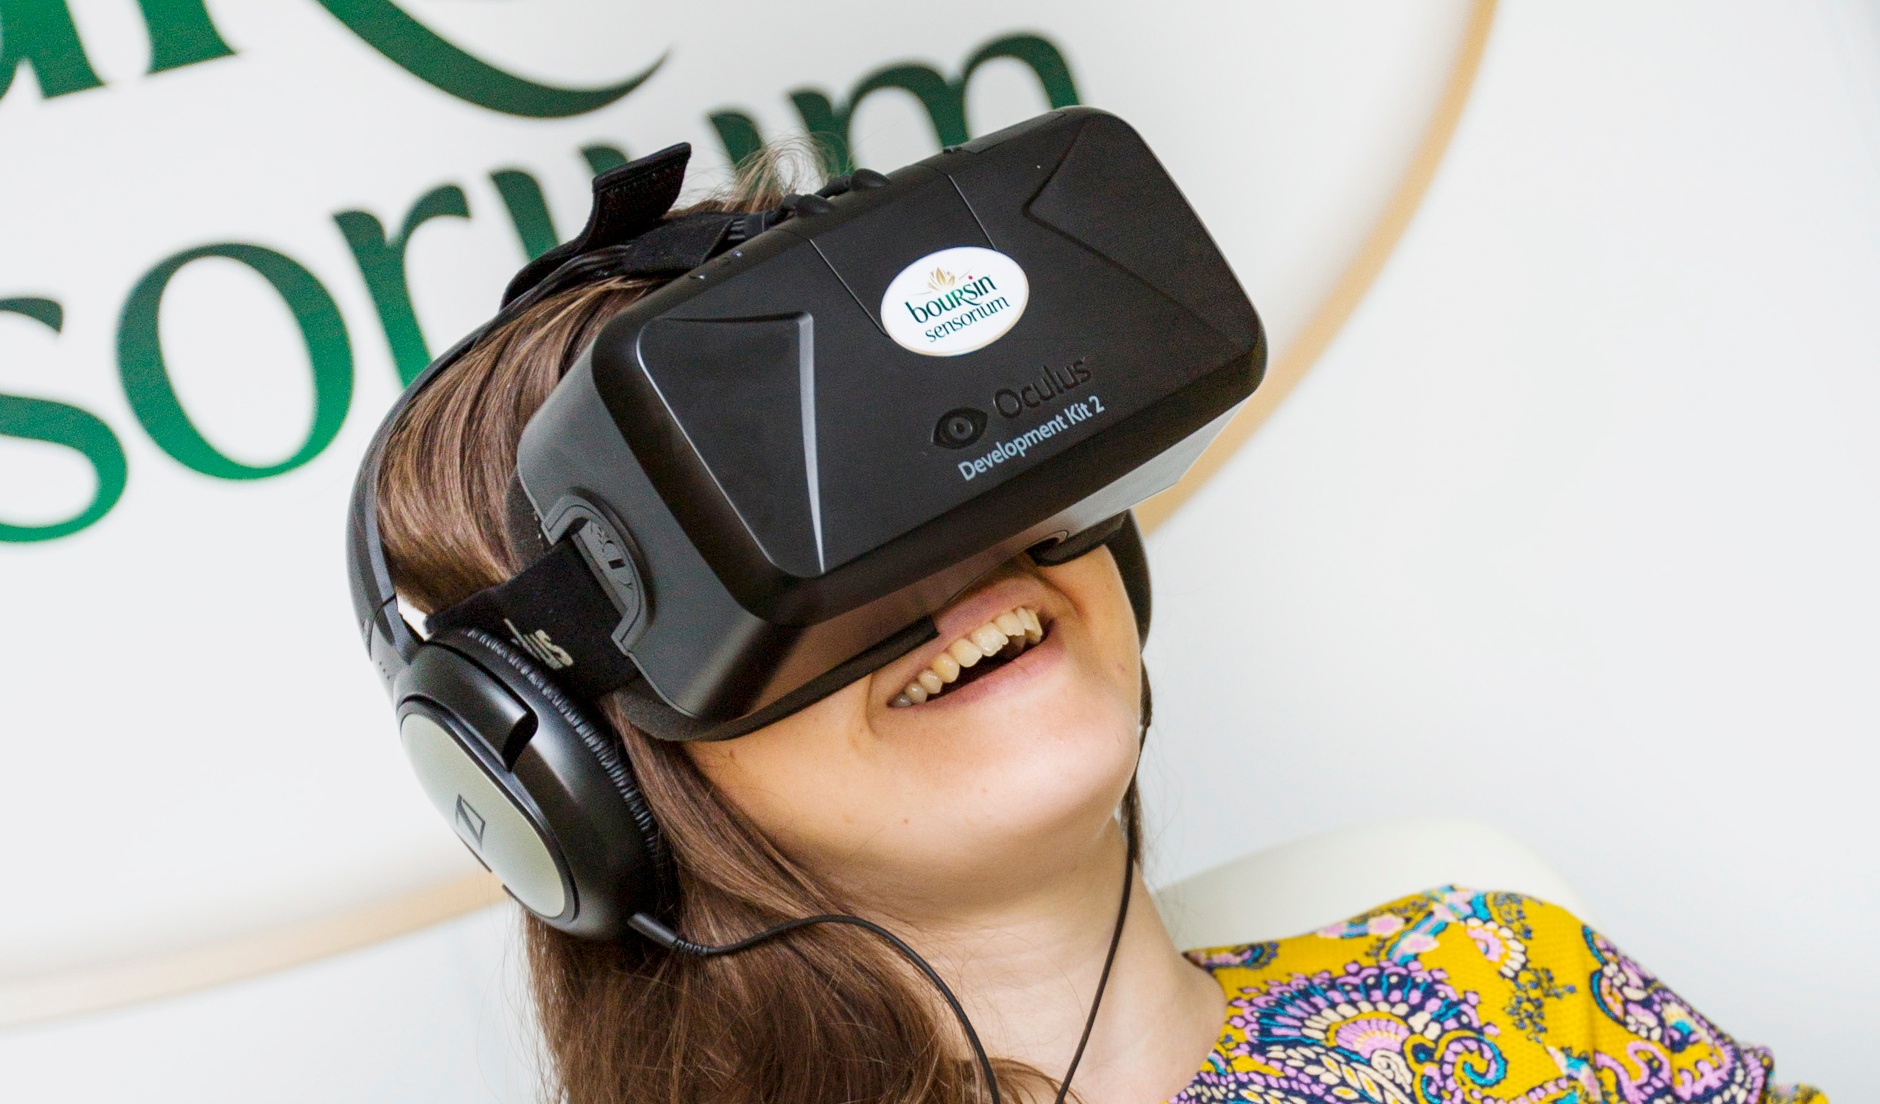 Boursin Oculus Rift VR experience